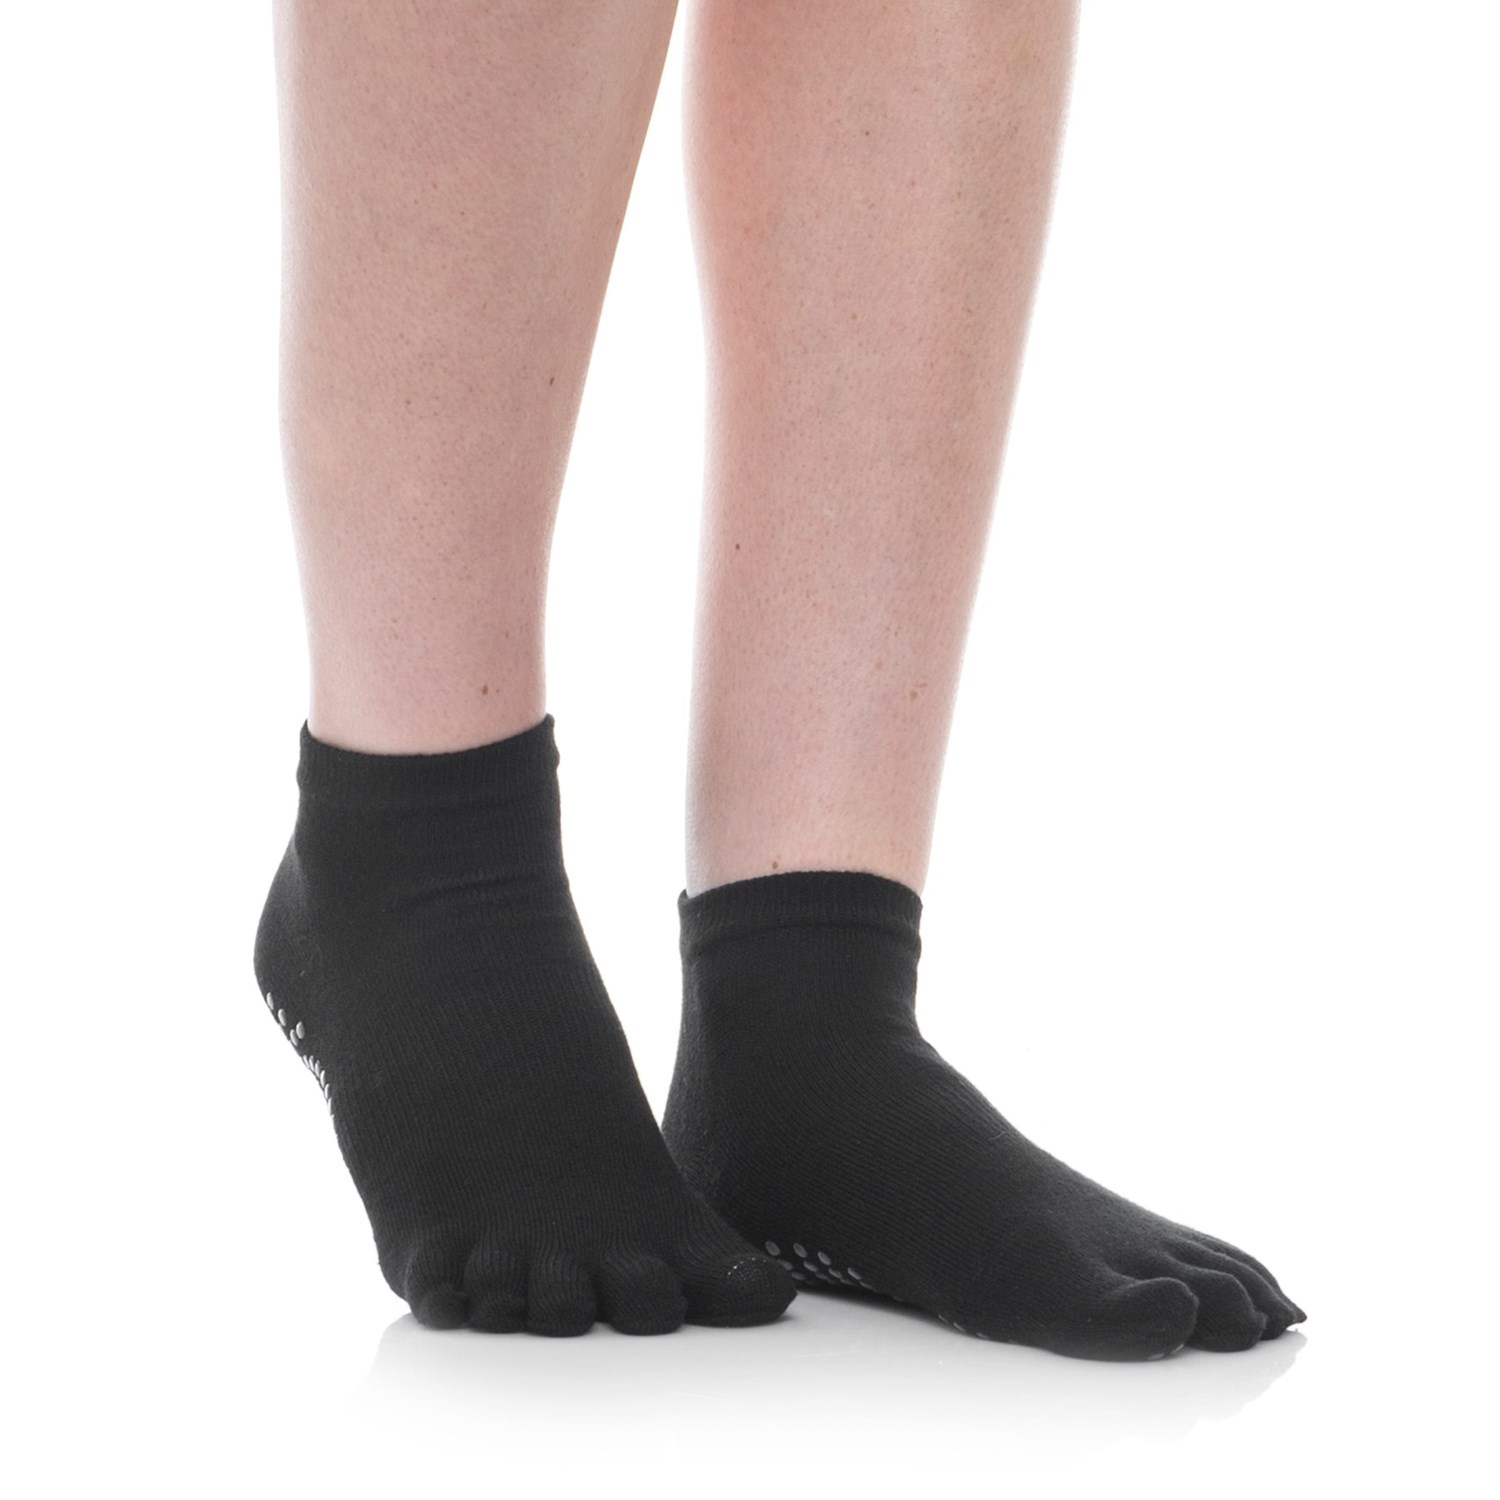 Gaiam Grippy Yoga Socks - Below the Ankle - Save 64%